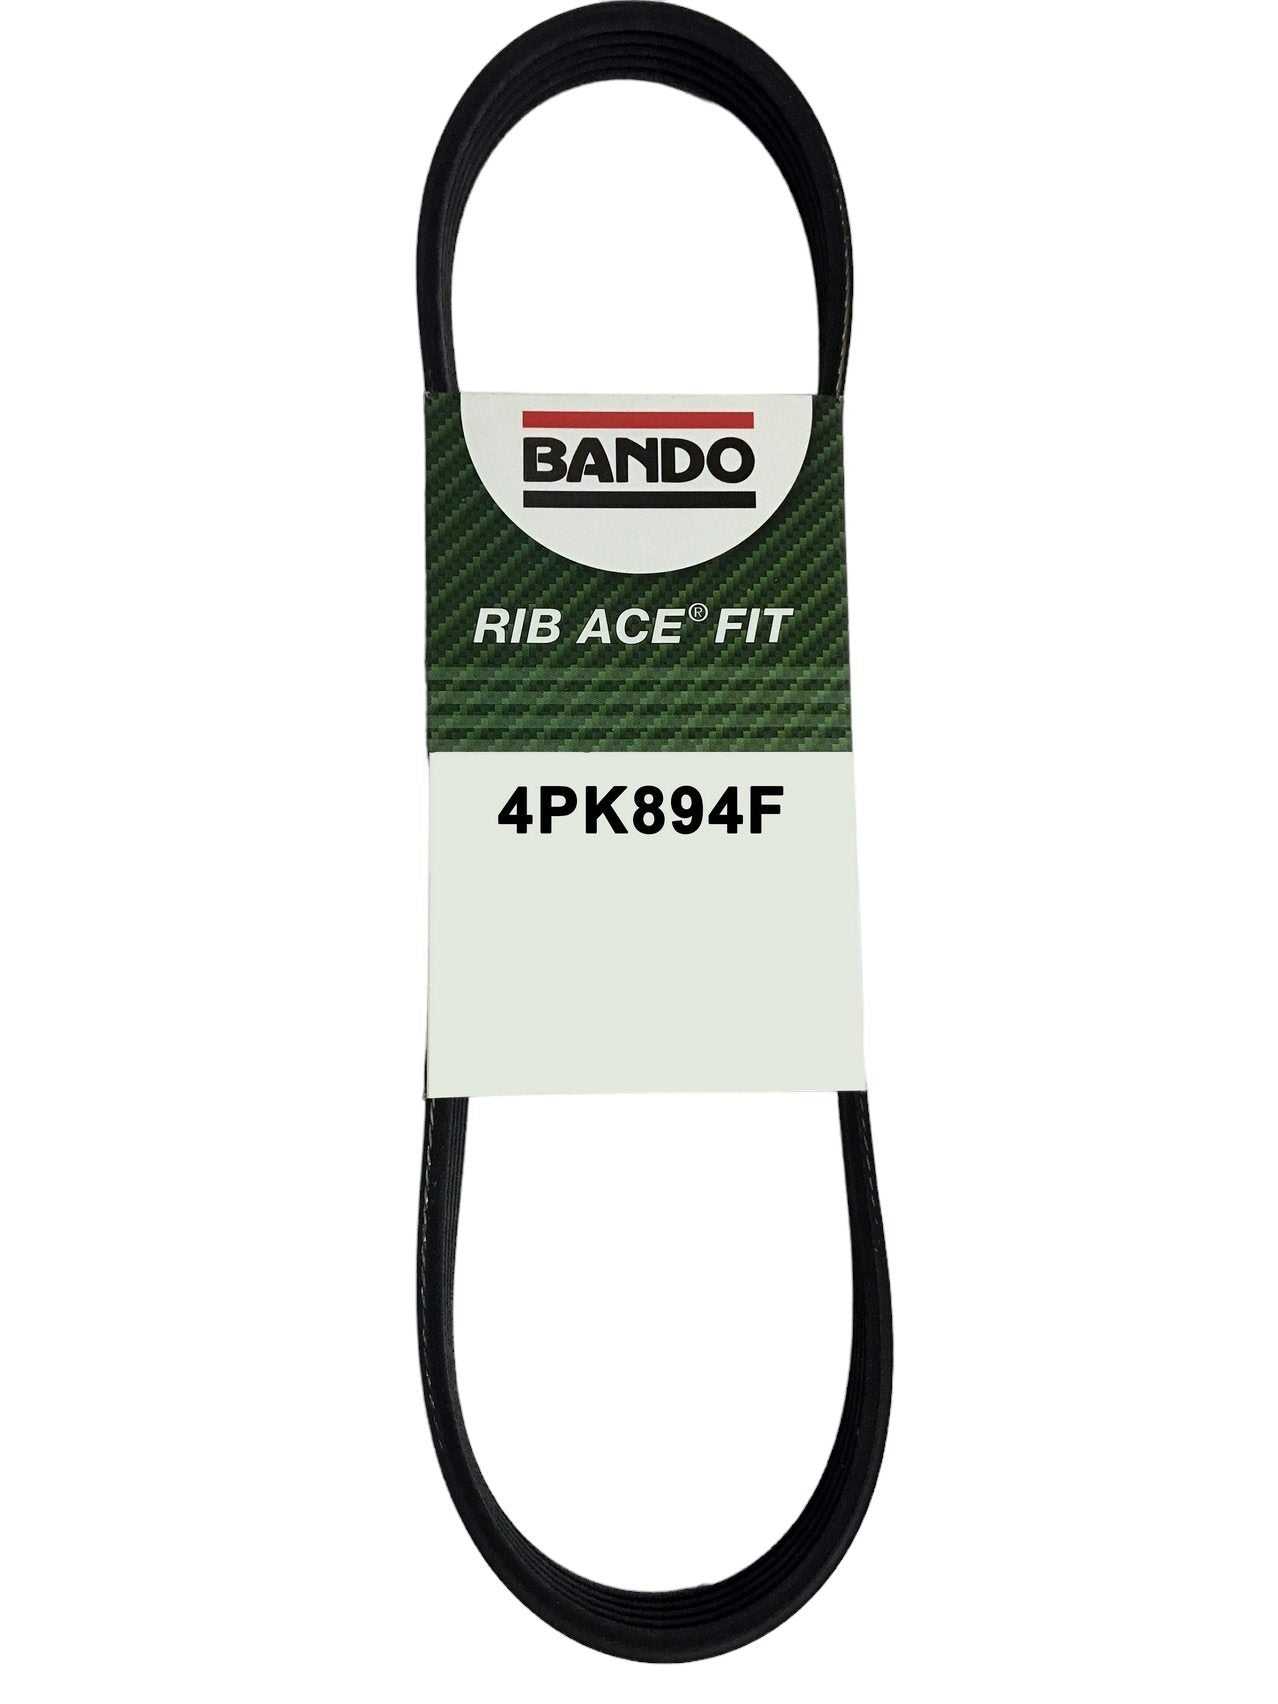 Bando Rib Ace Fit Precision Engineered FIT V-Ribbed Belt 4PK894F